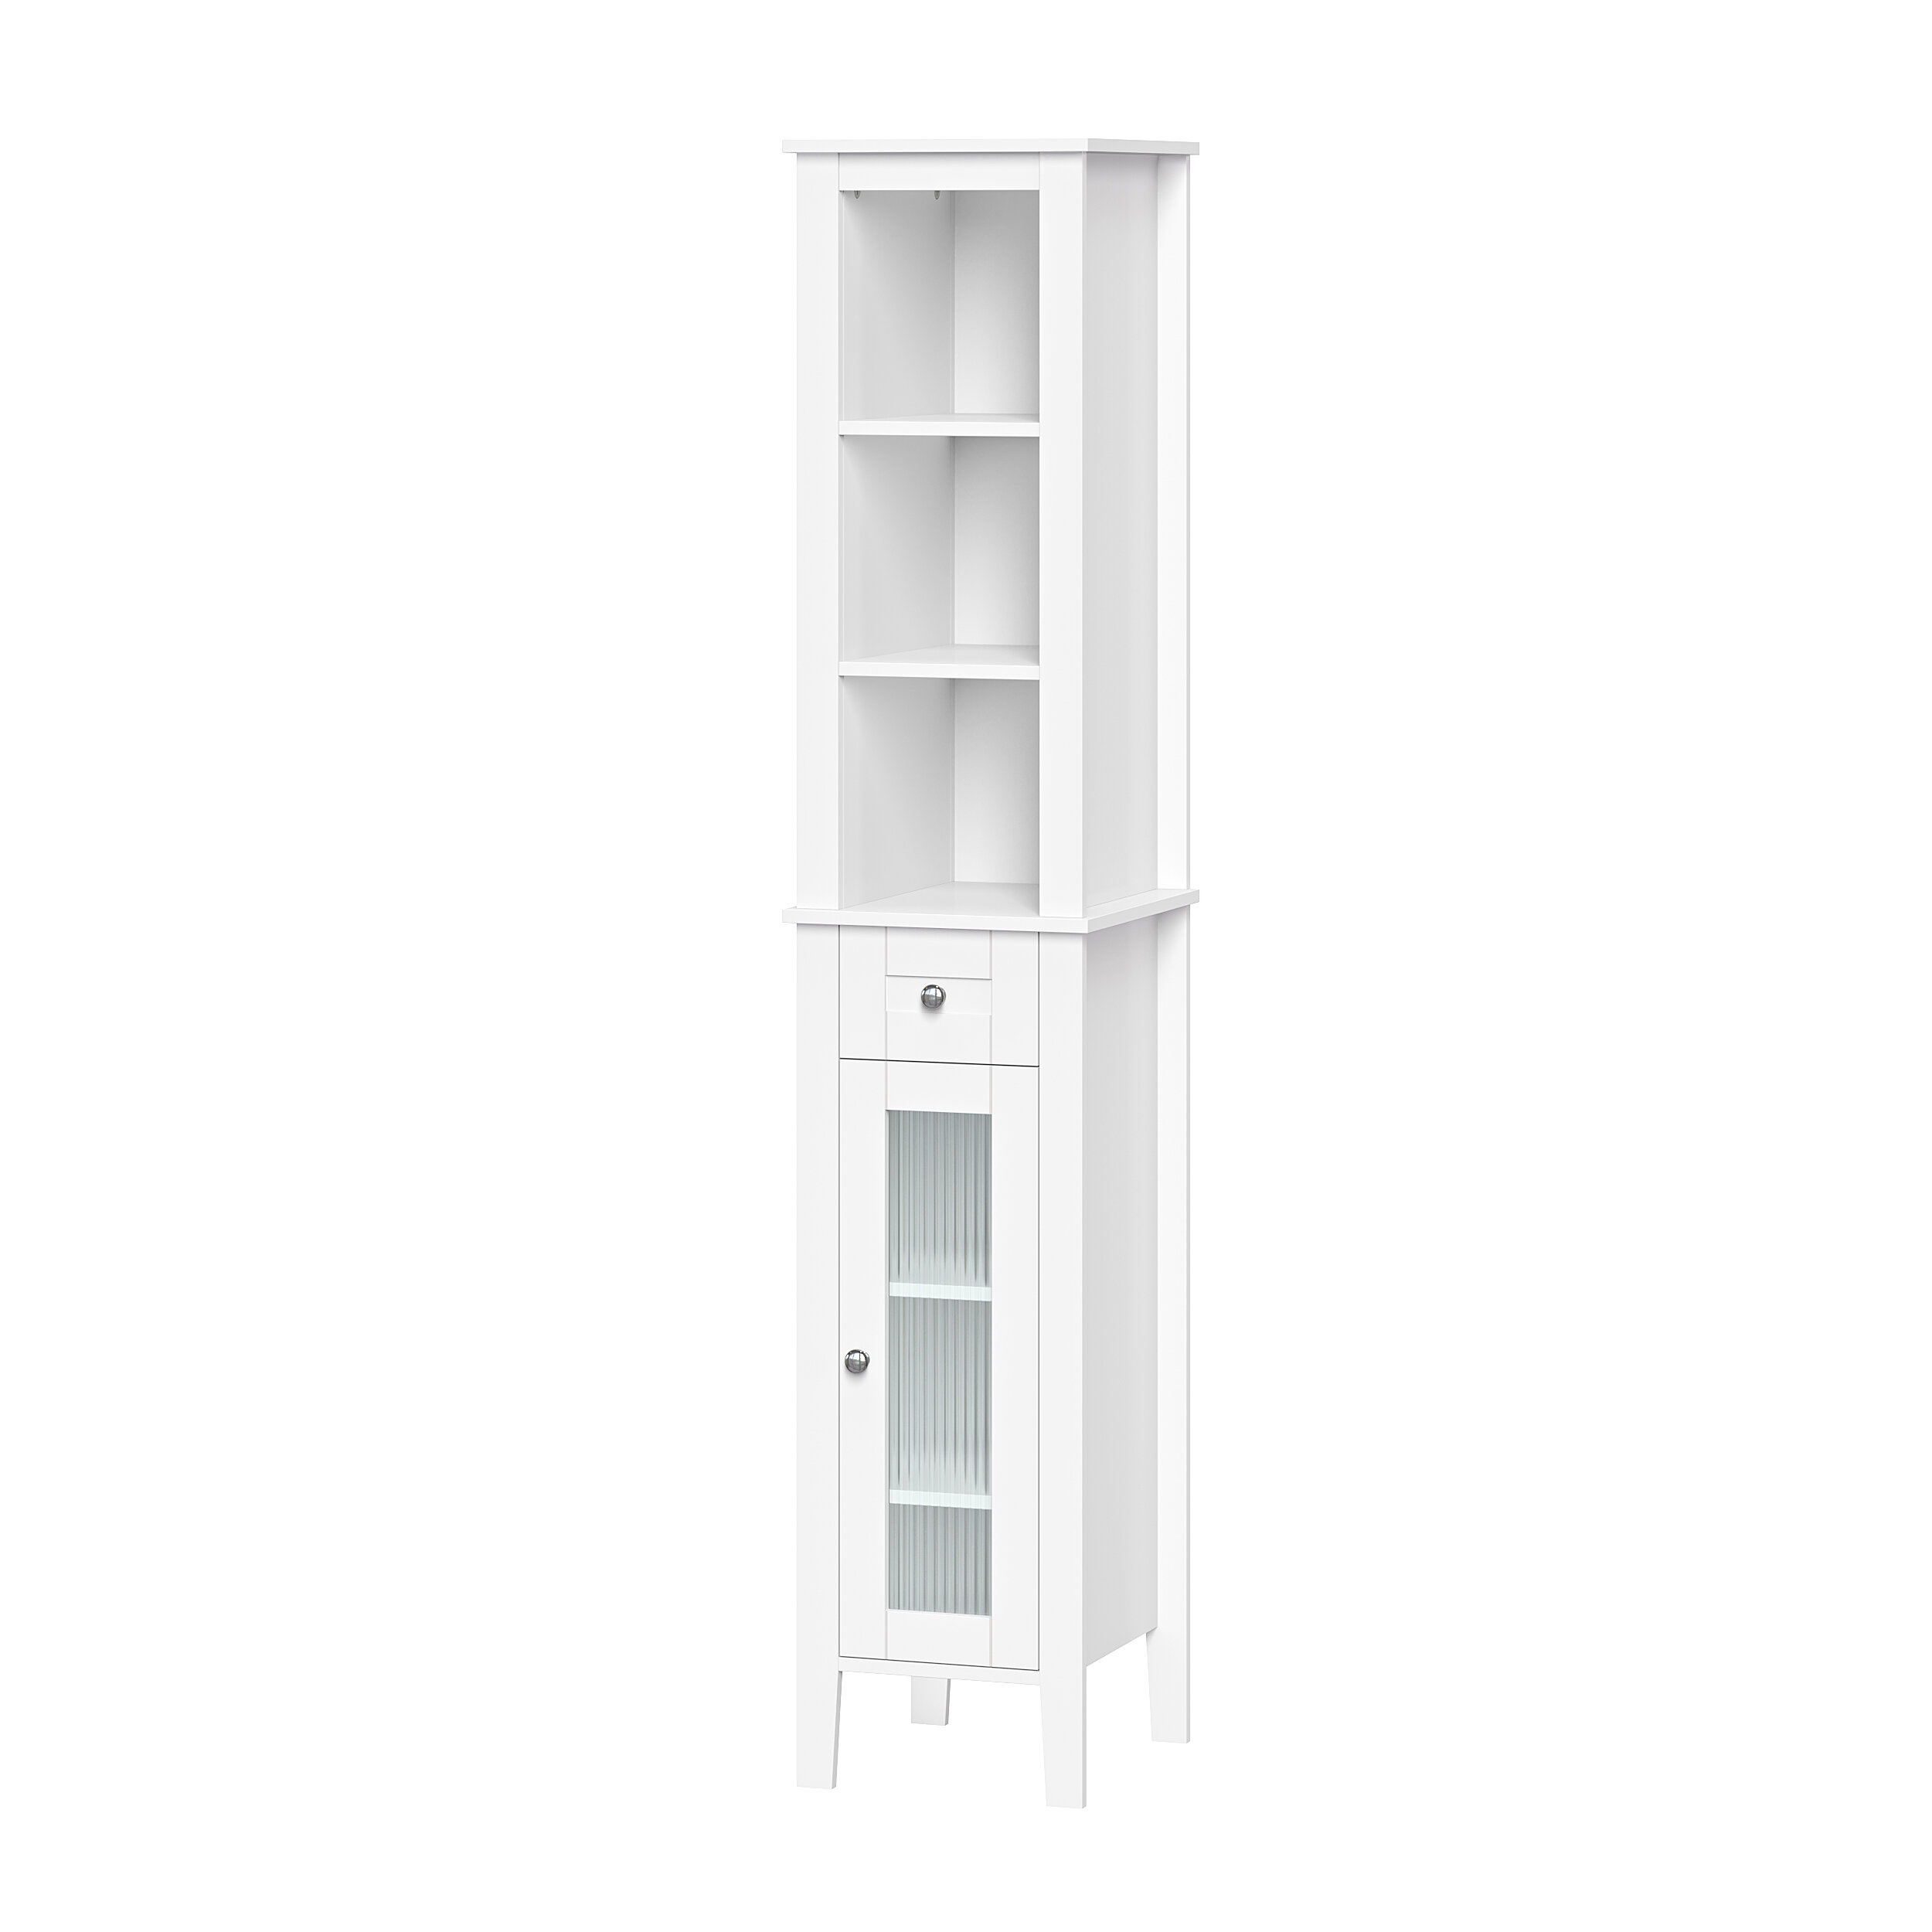 https://visualhunt.com/photos/23/ilidio-freestanding-linen-cabinet.jpg